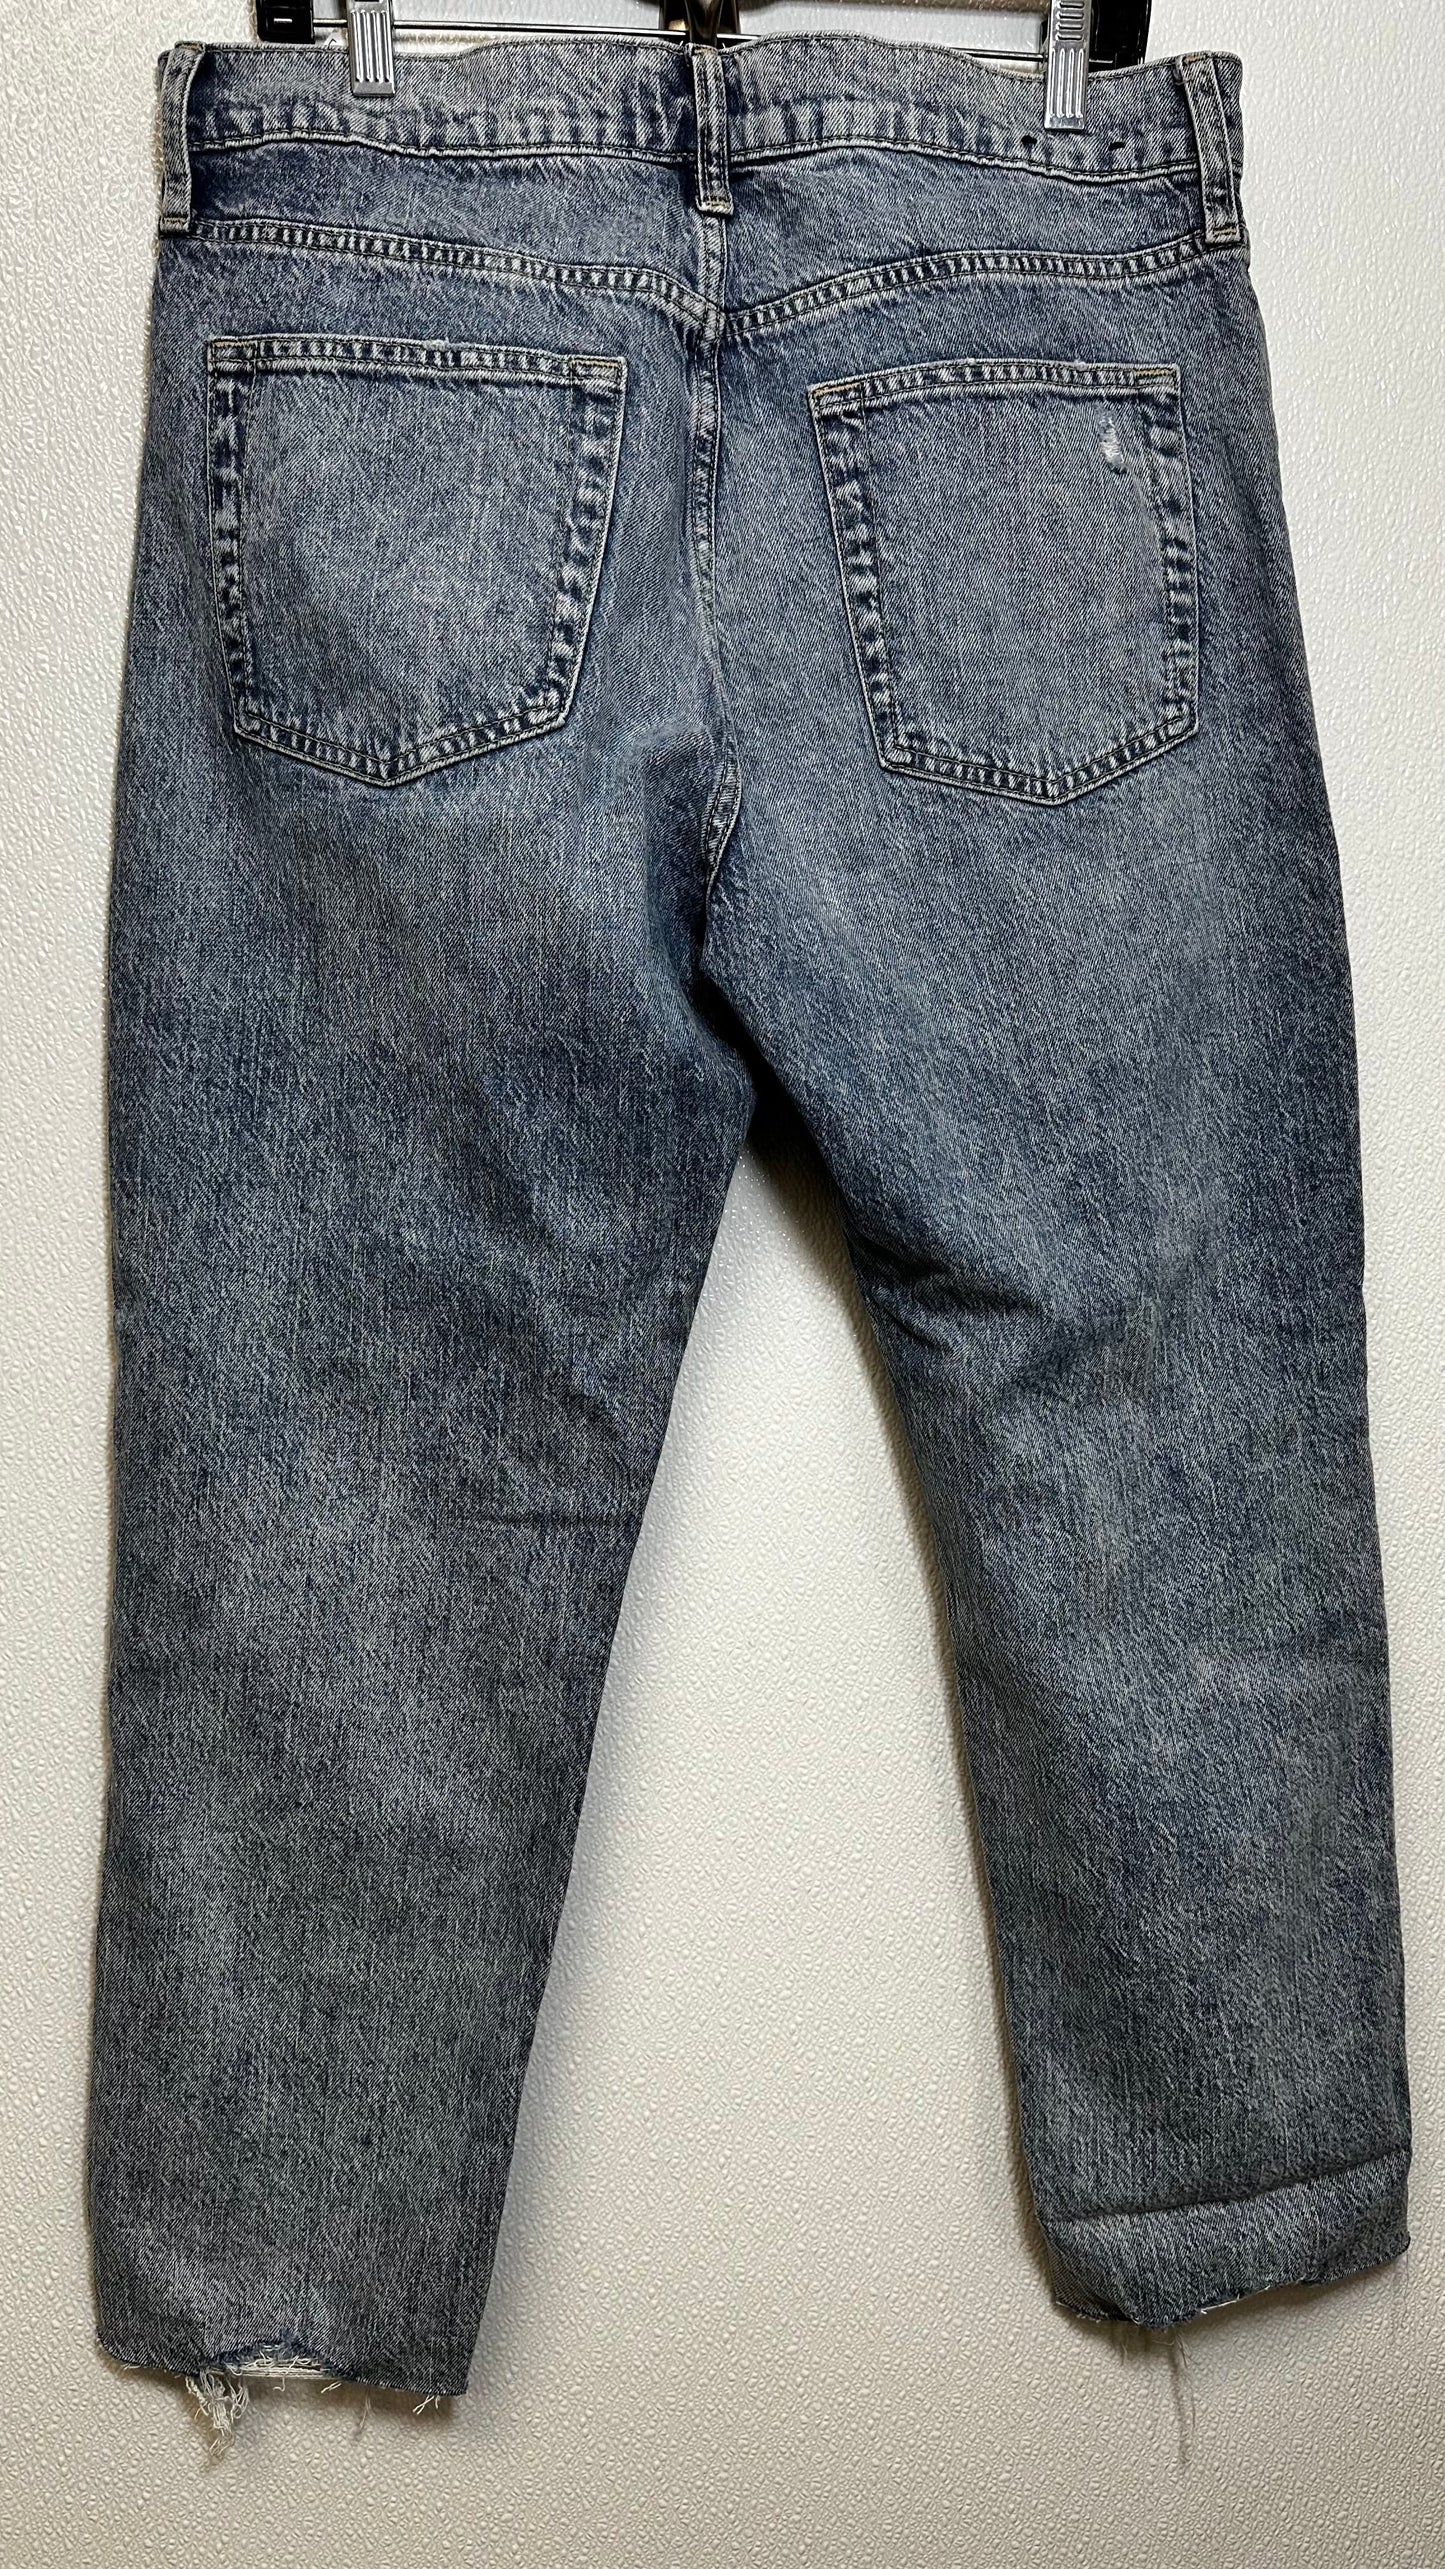 Denim Jeans Relaxed/boyfriend Gap O, Size 14